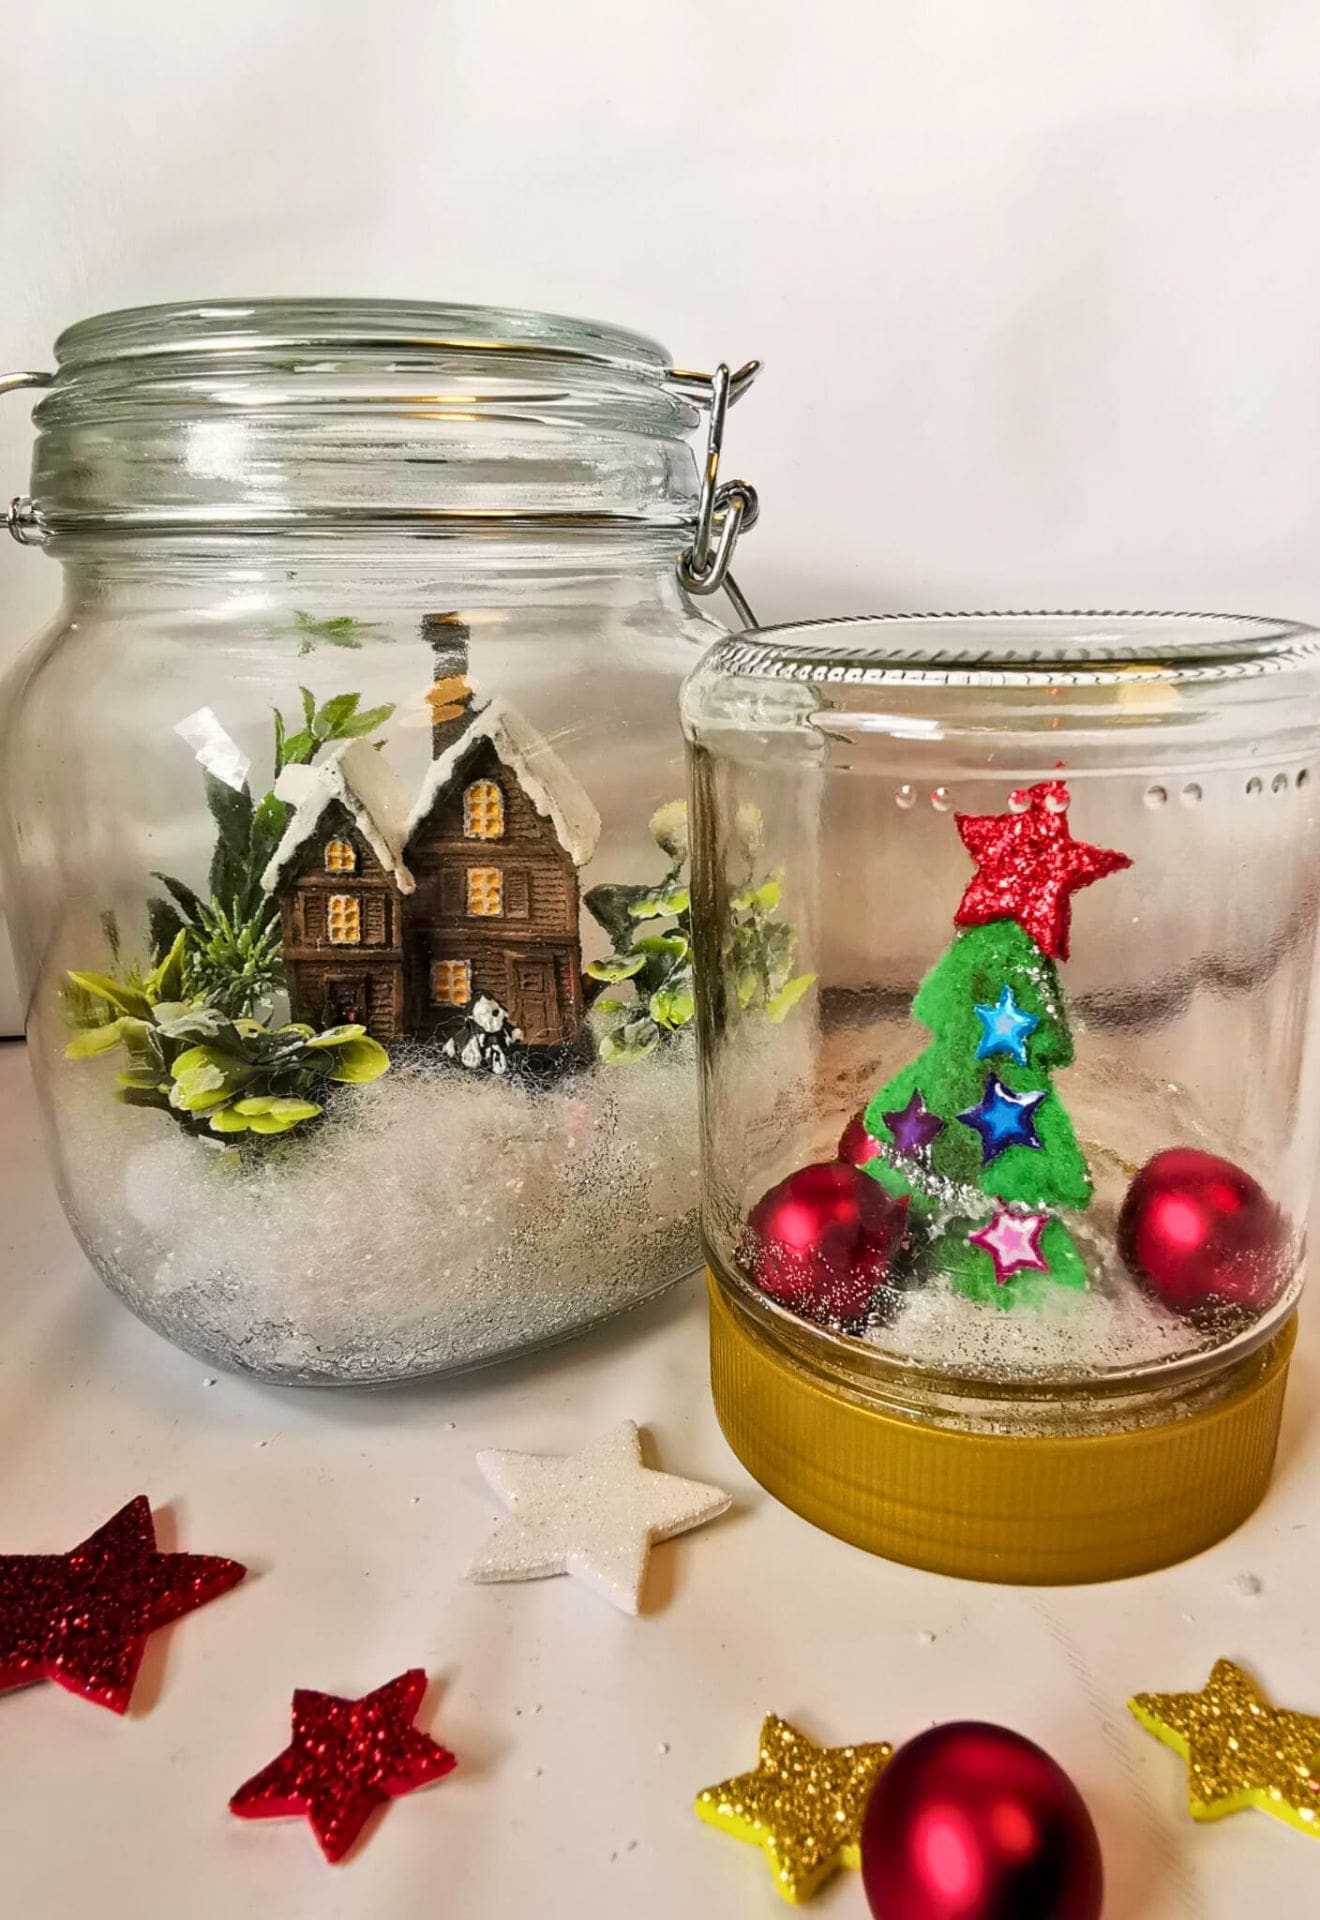 DIY Fun Project: Beautiful Winter Wonderland in a Jar